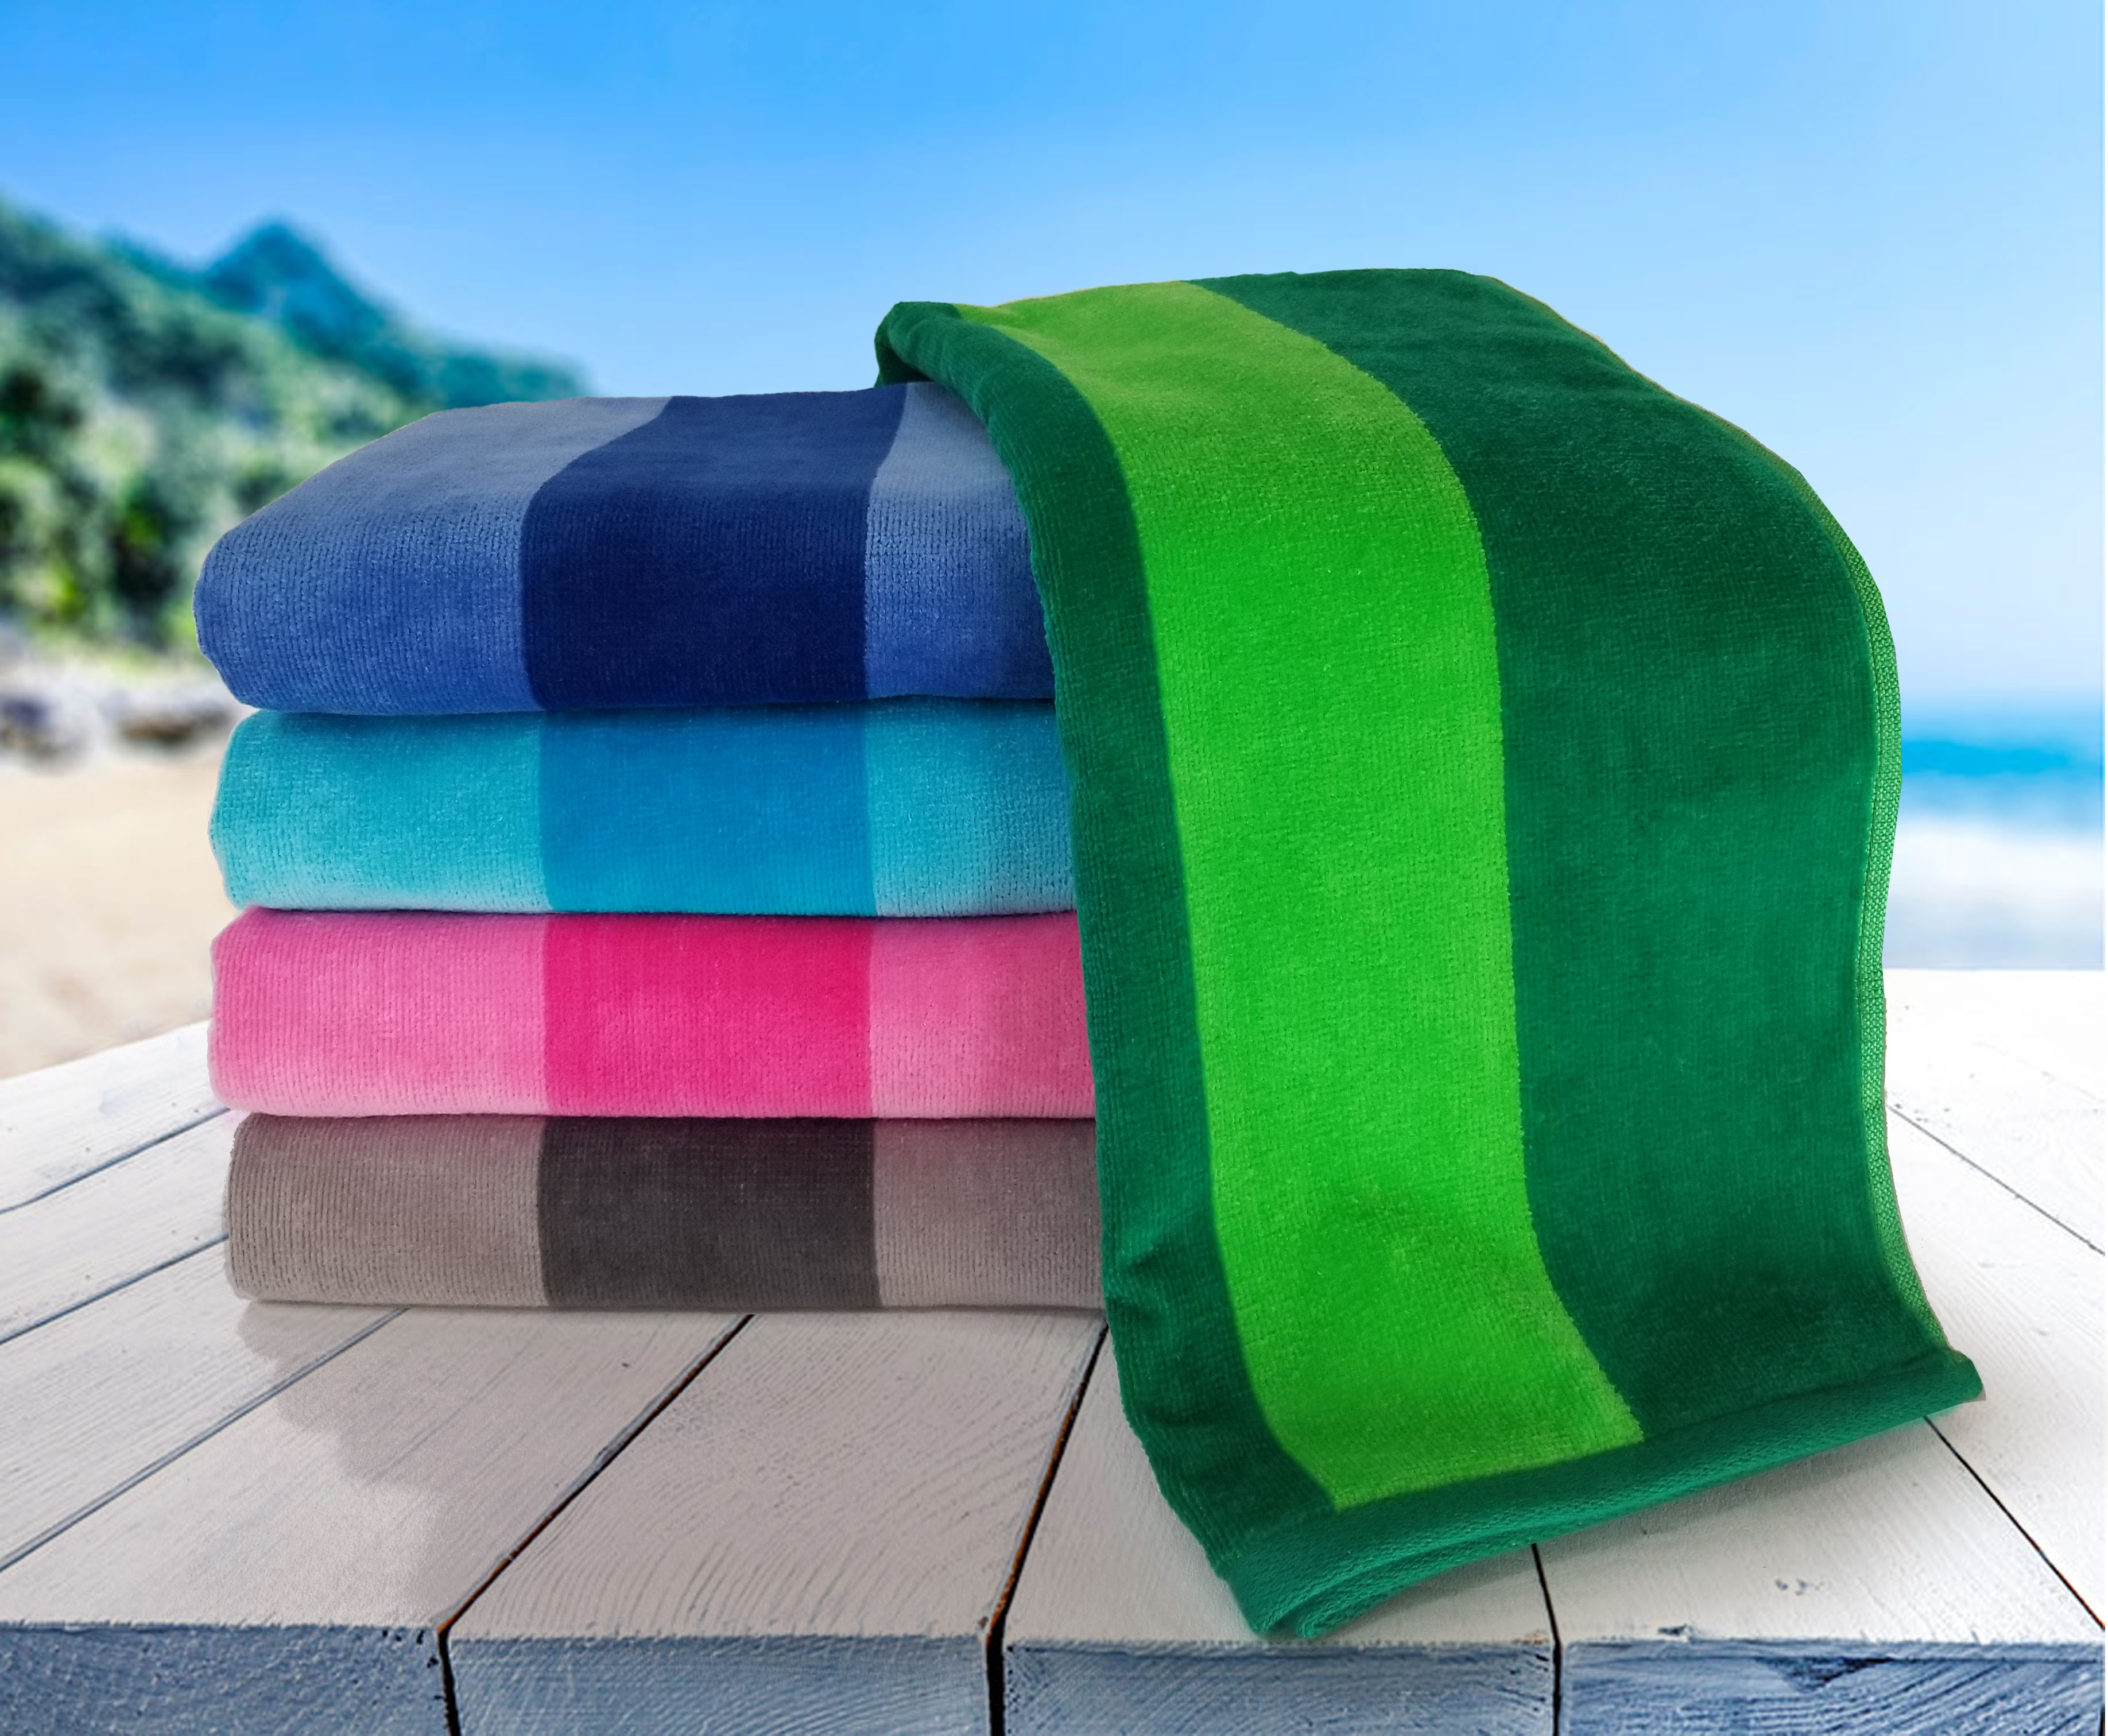 EMBROIDERED 30x60 Terry Beach Towels Cotton Velour Two Tone Cabana Stripe 11 lbs per doz, 100% Cotton.